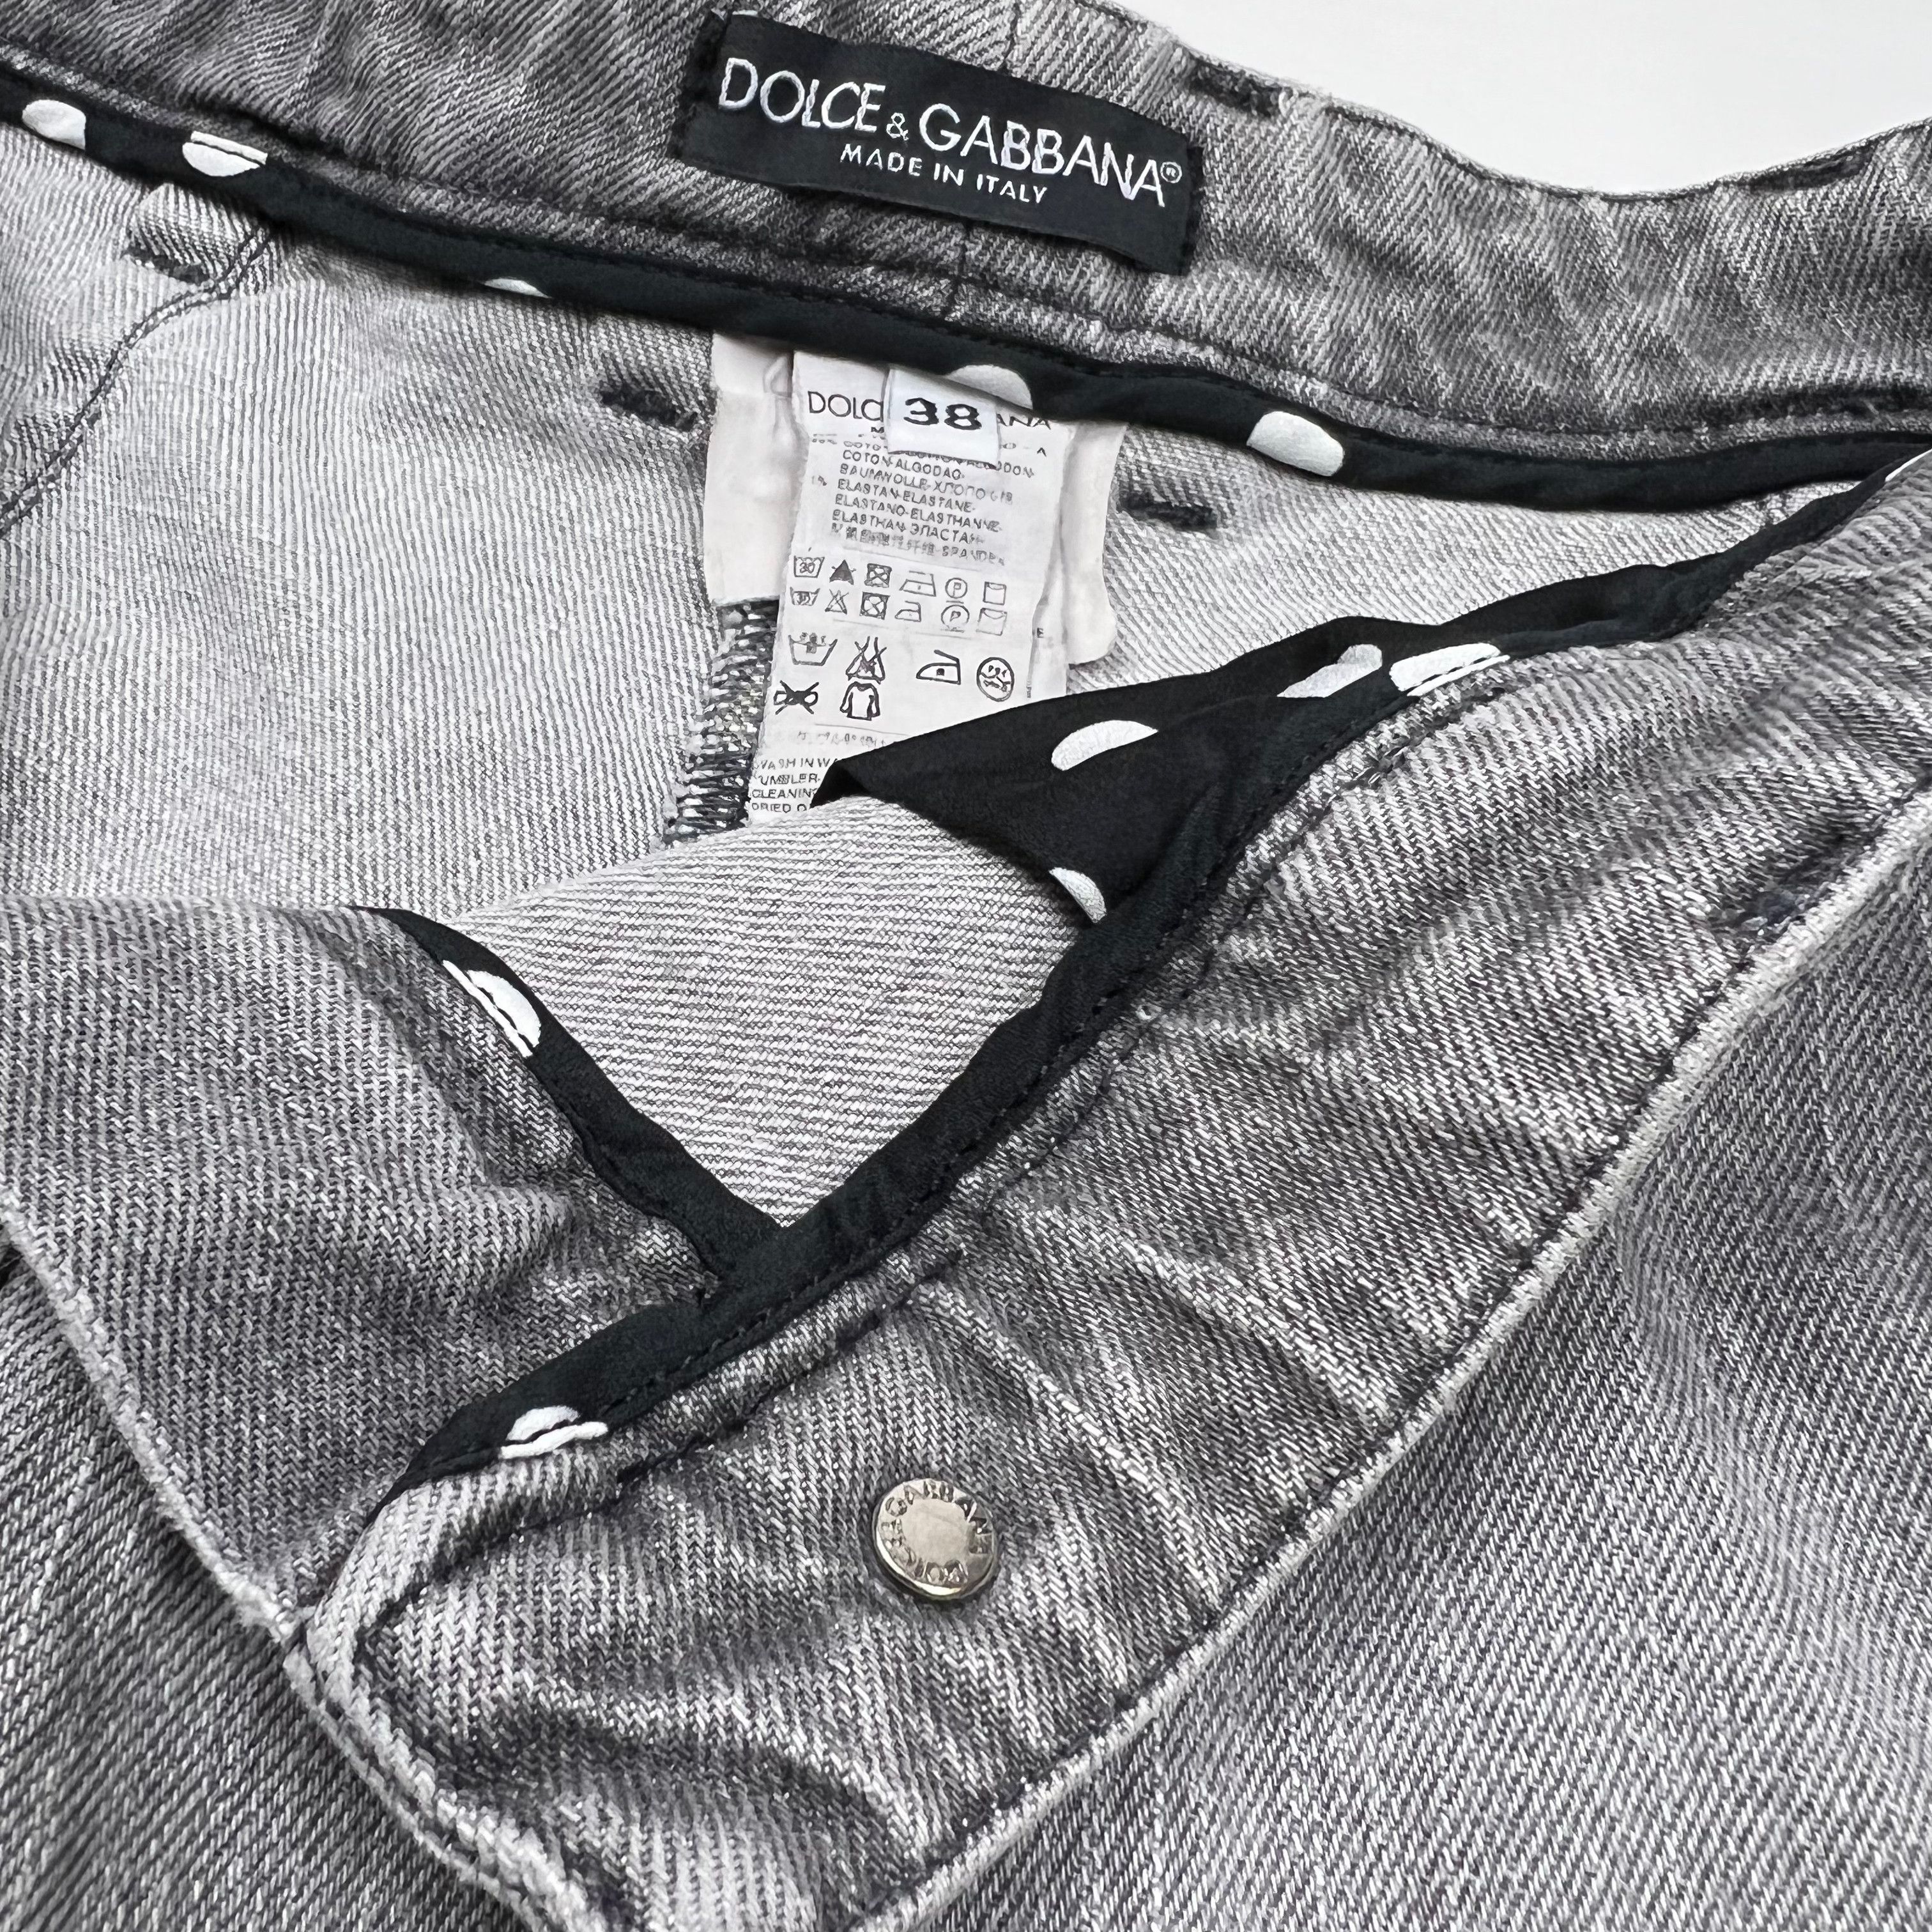 Dolce & Gabbana Dolce&Gabbana High Waisted Shorts Light Grey SZ 24" (IT 38) Size 24" / US 00 / IT 34 - 4 Thumbnail